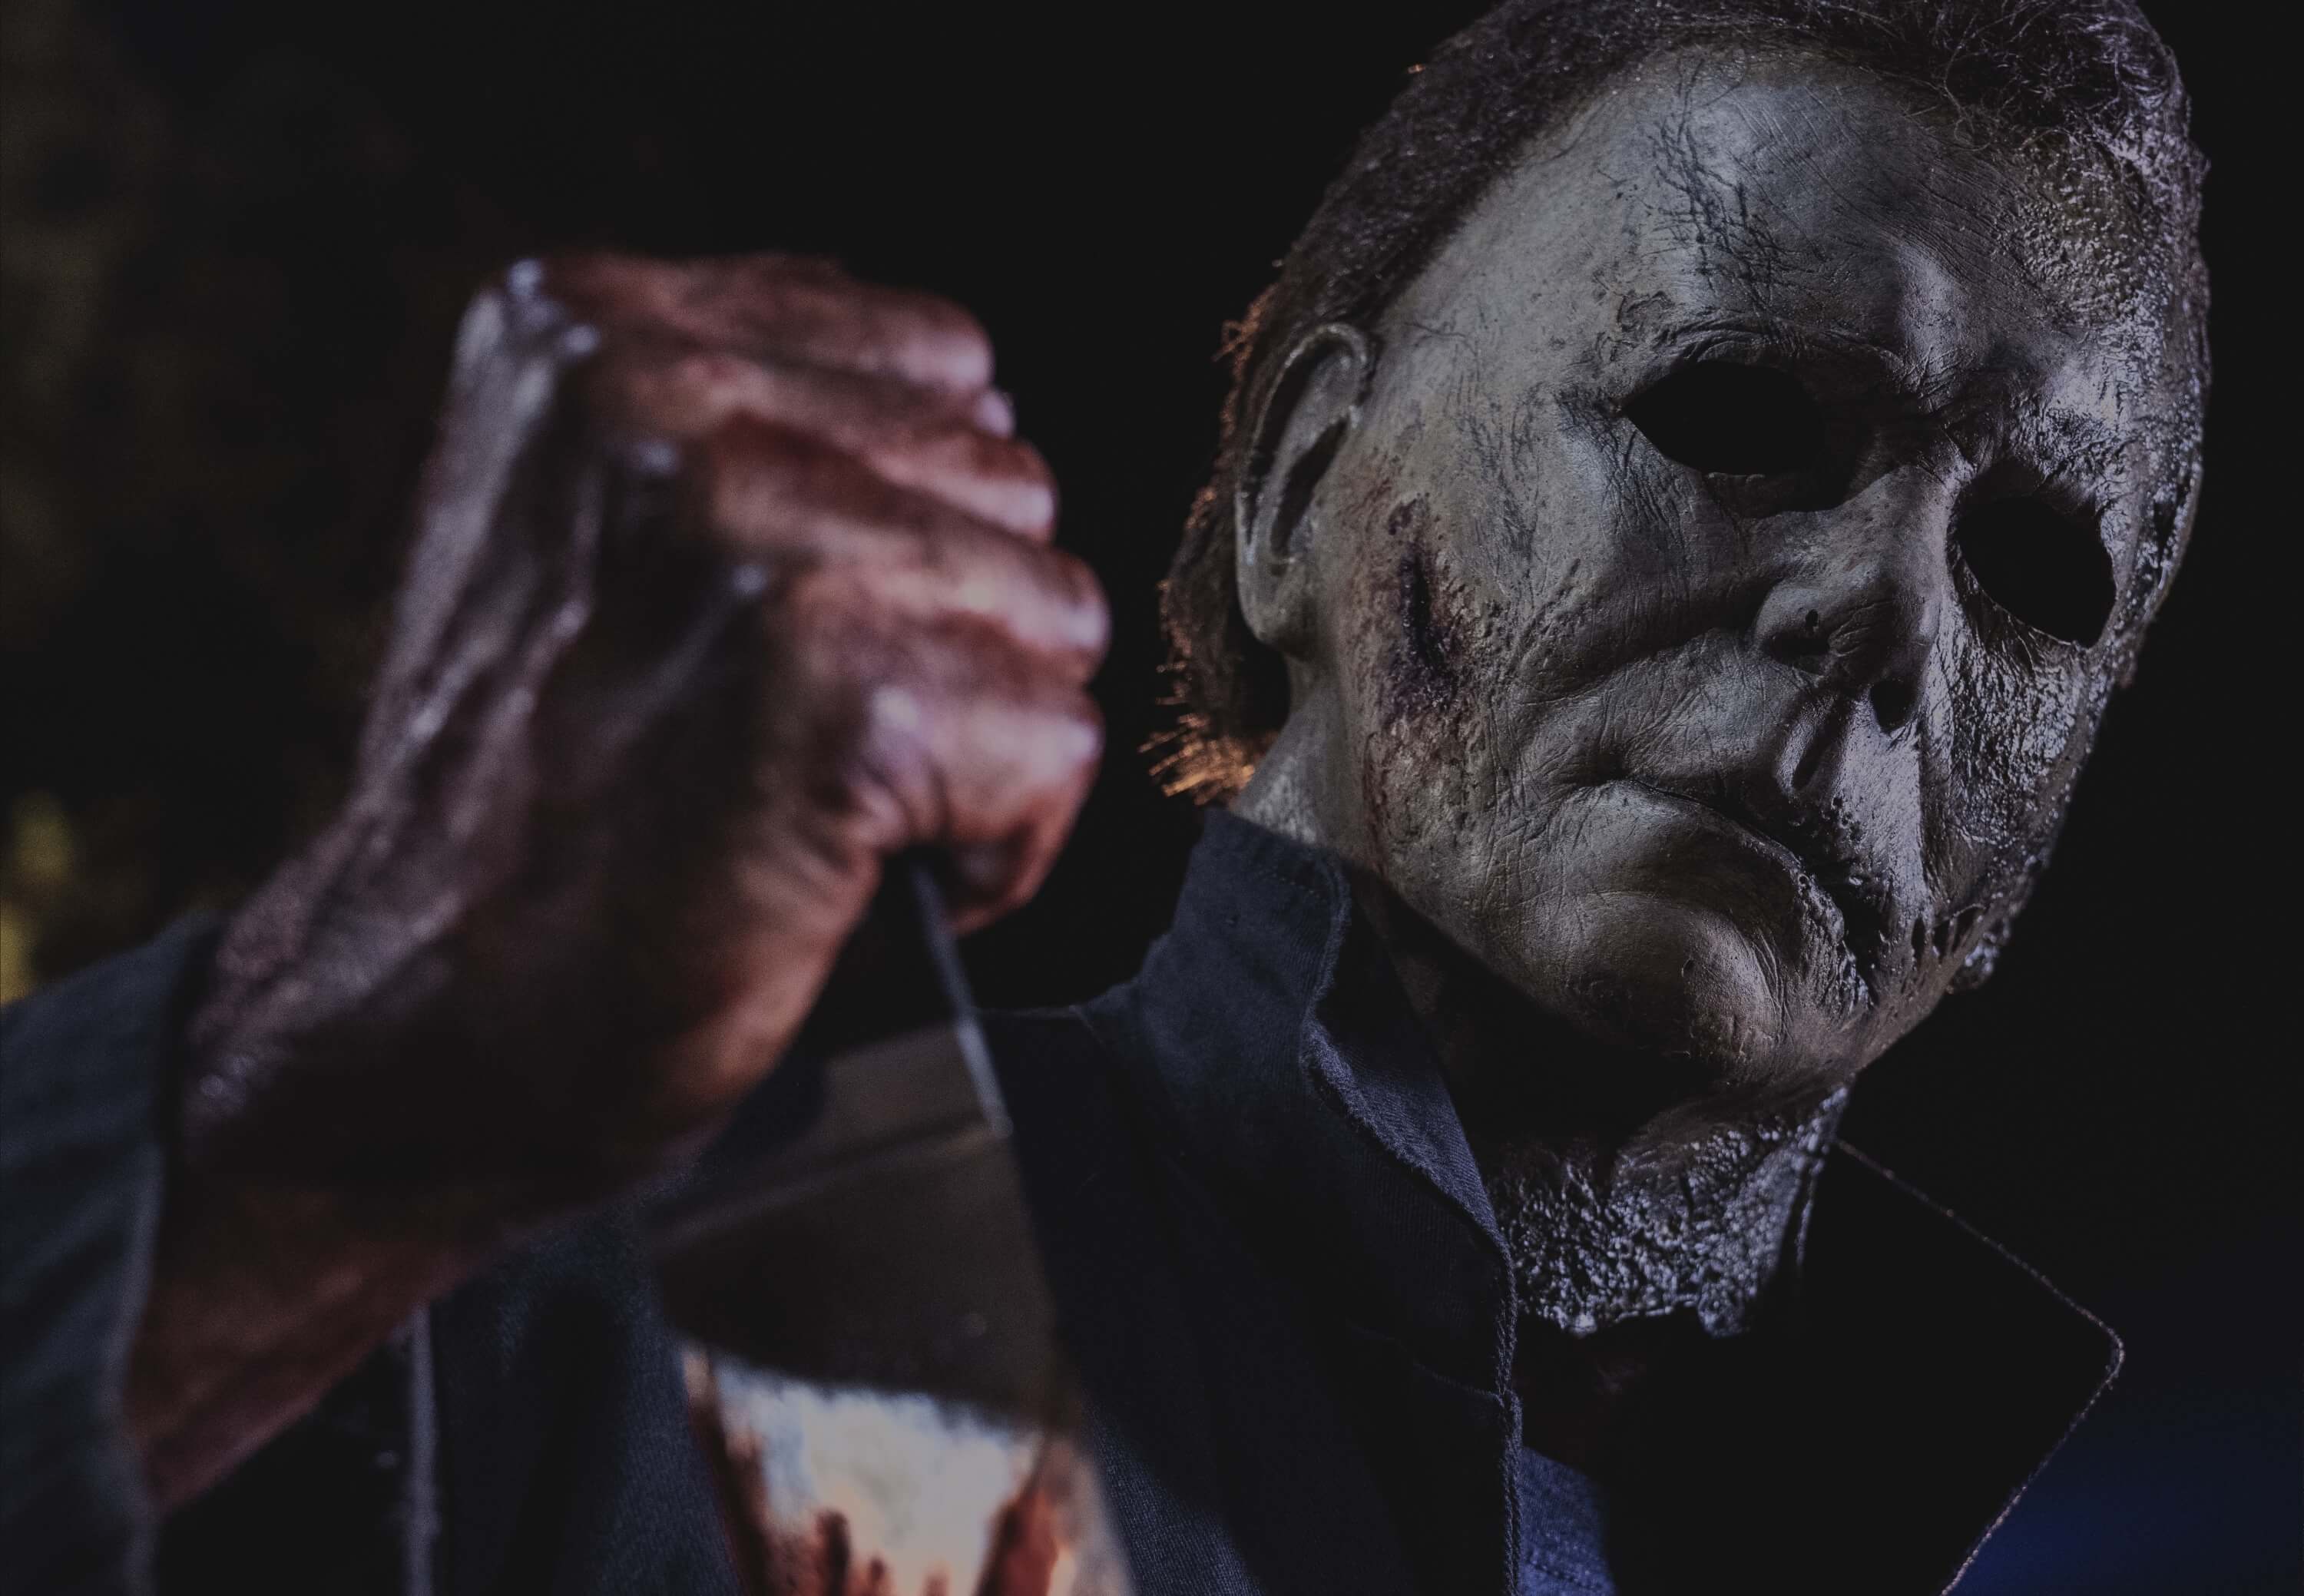 Halloween Kills sees Michael Meyers return